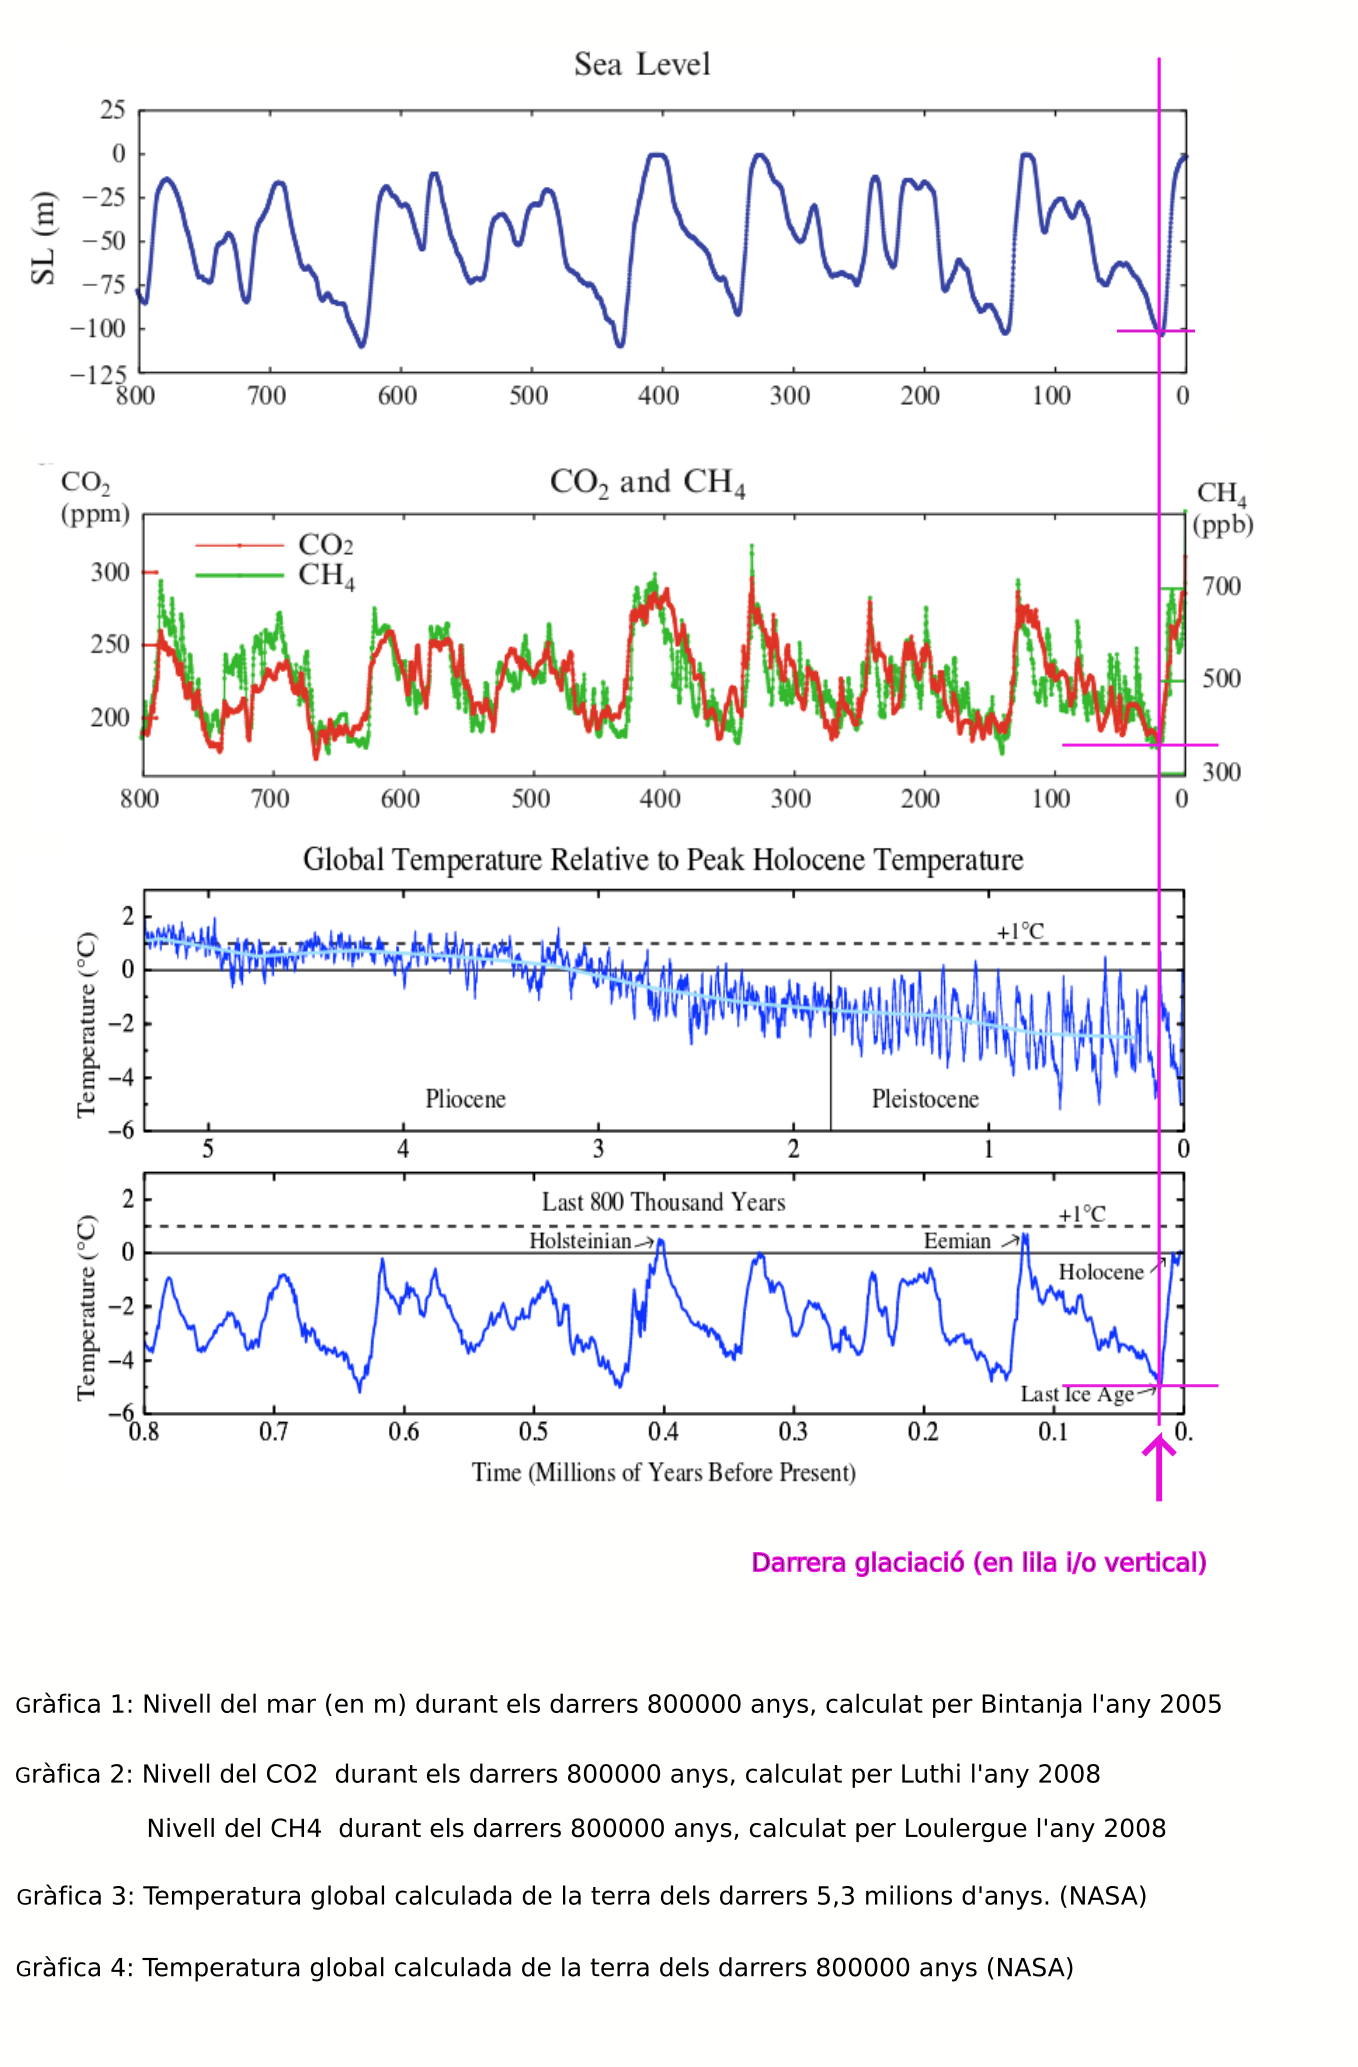 Sea Level - CO2 - CH4 - Temp until last glacial